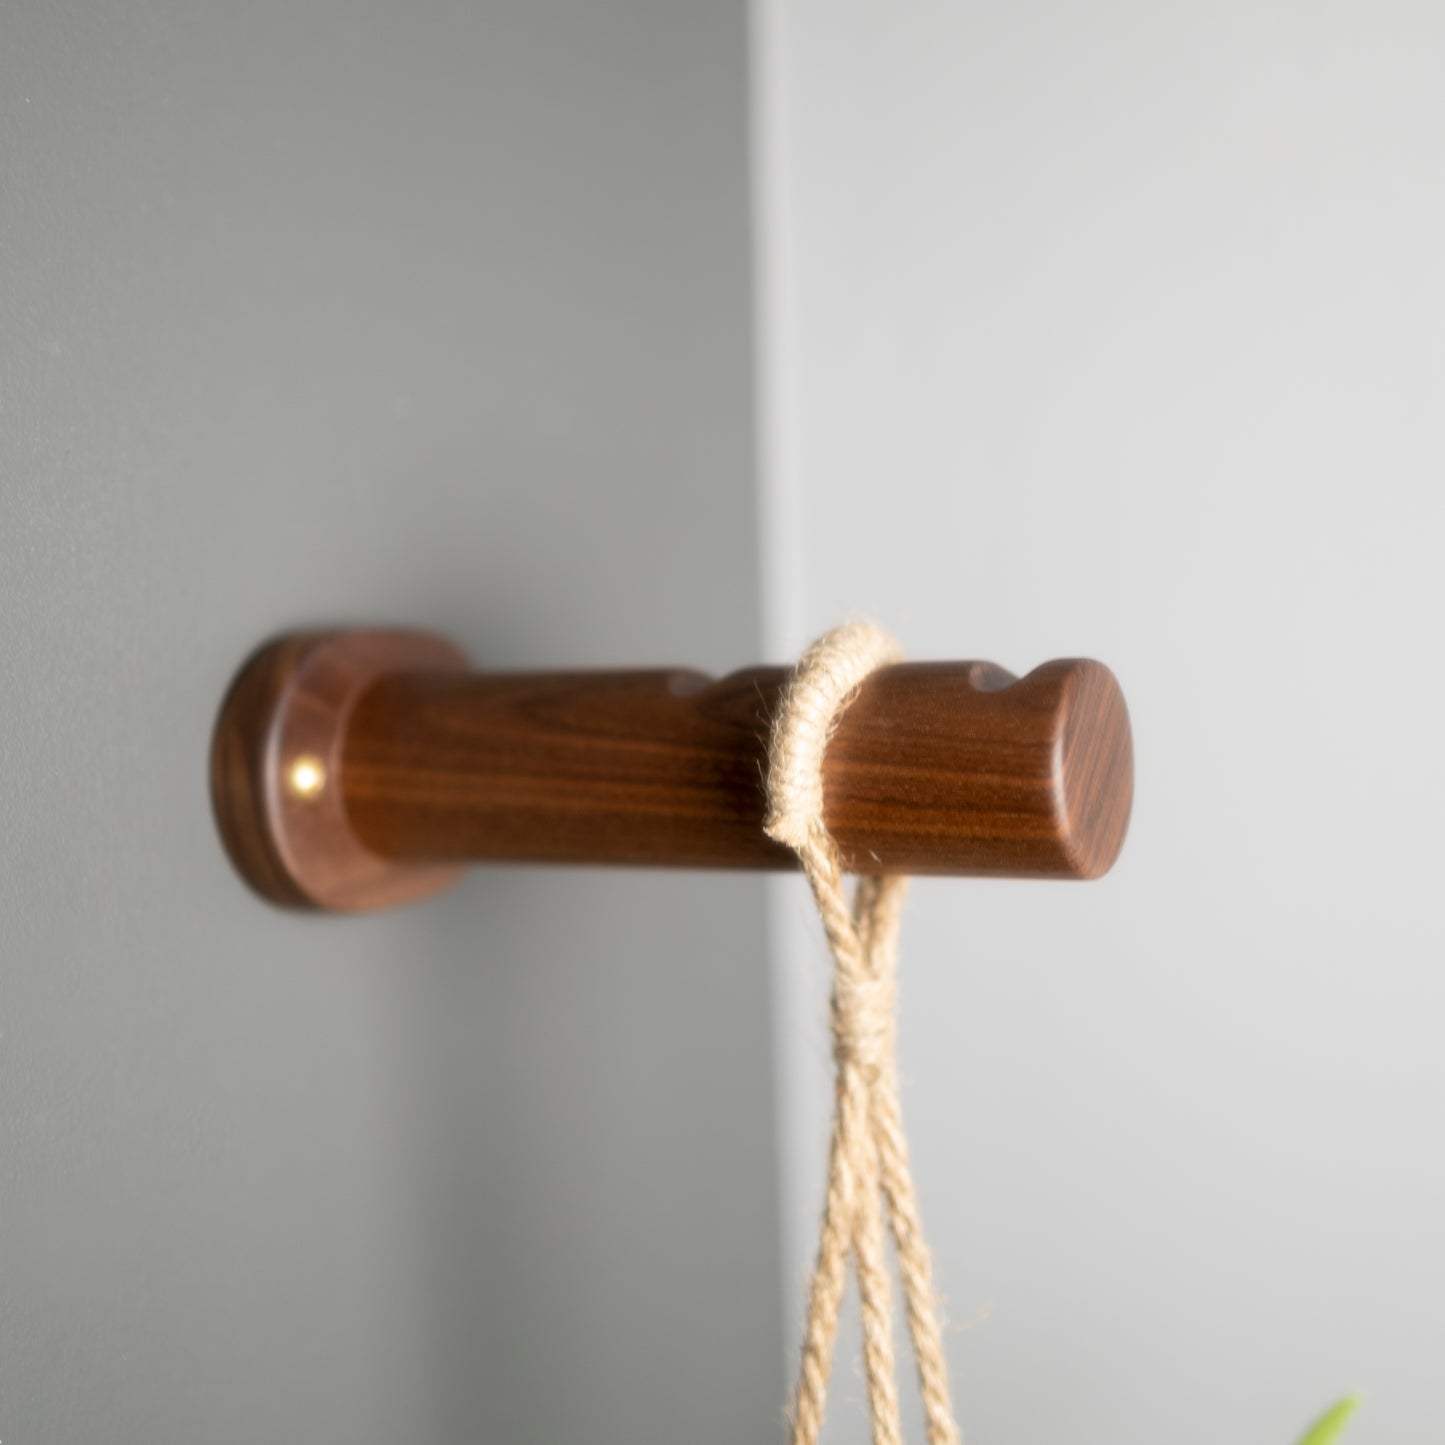 walnut wall hanging planter brackets